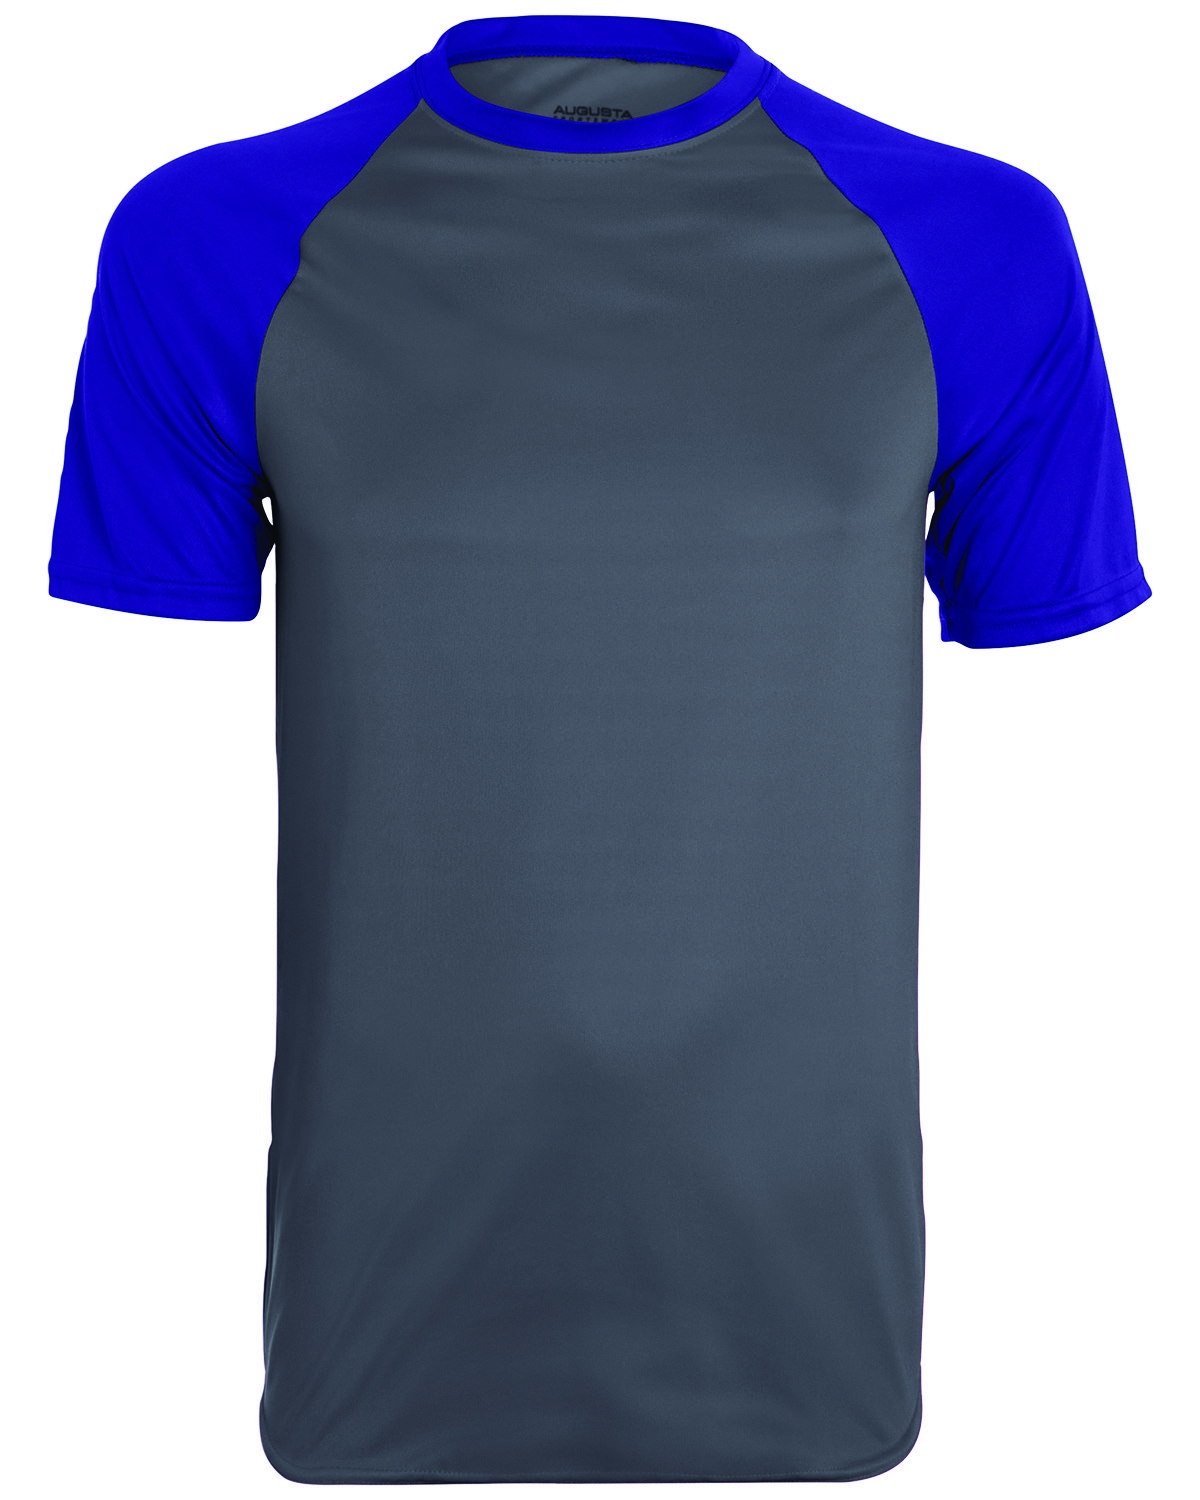 Augusta Sportswear 423 - Short Sleeve Baseball Jersey